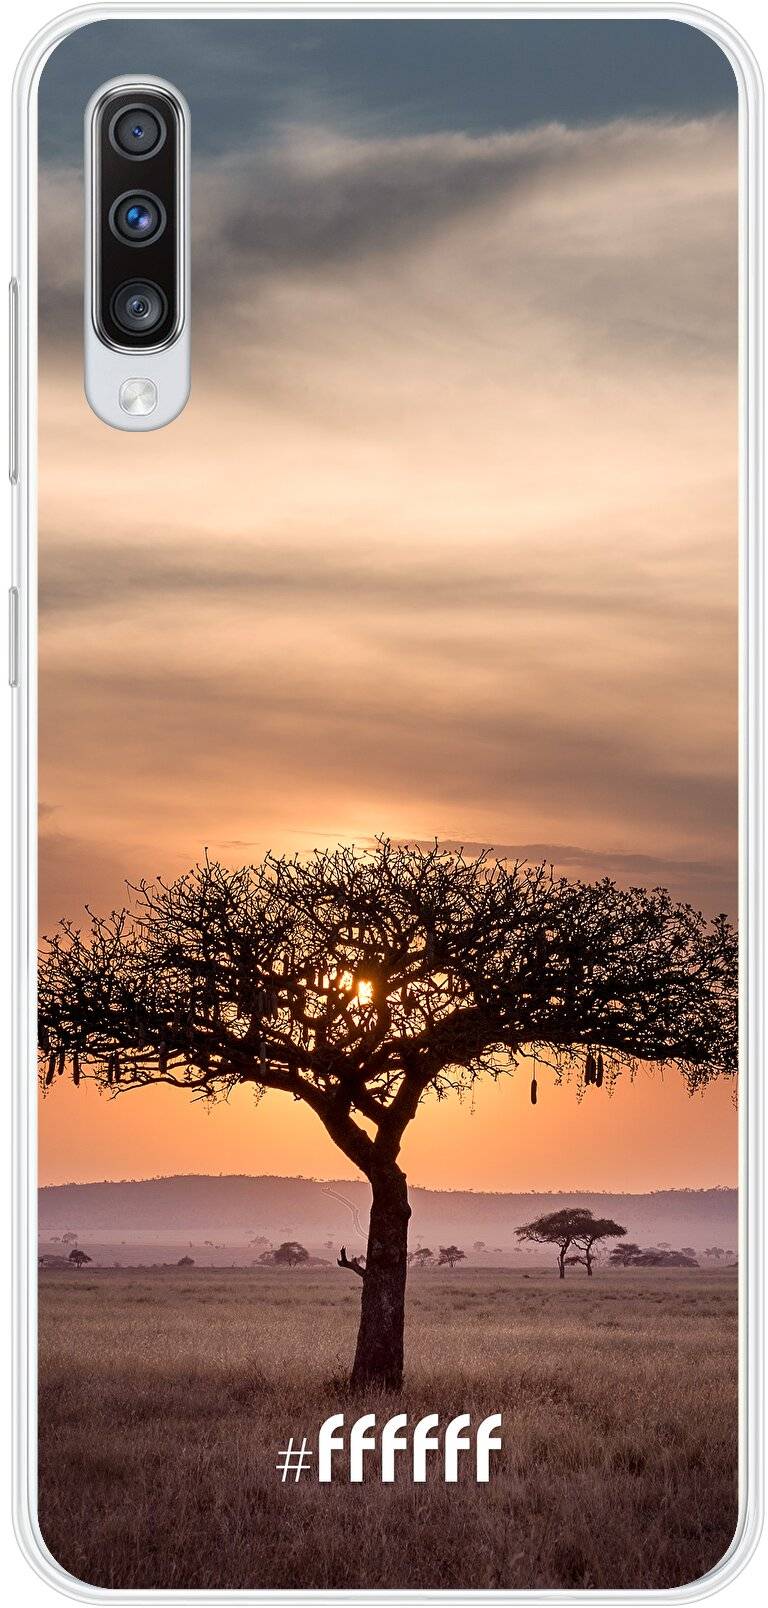 Tanzania Galaxy A70